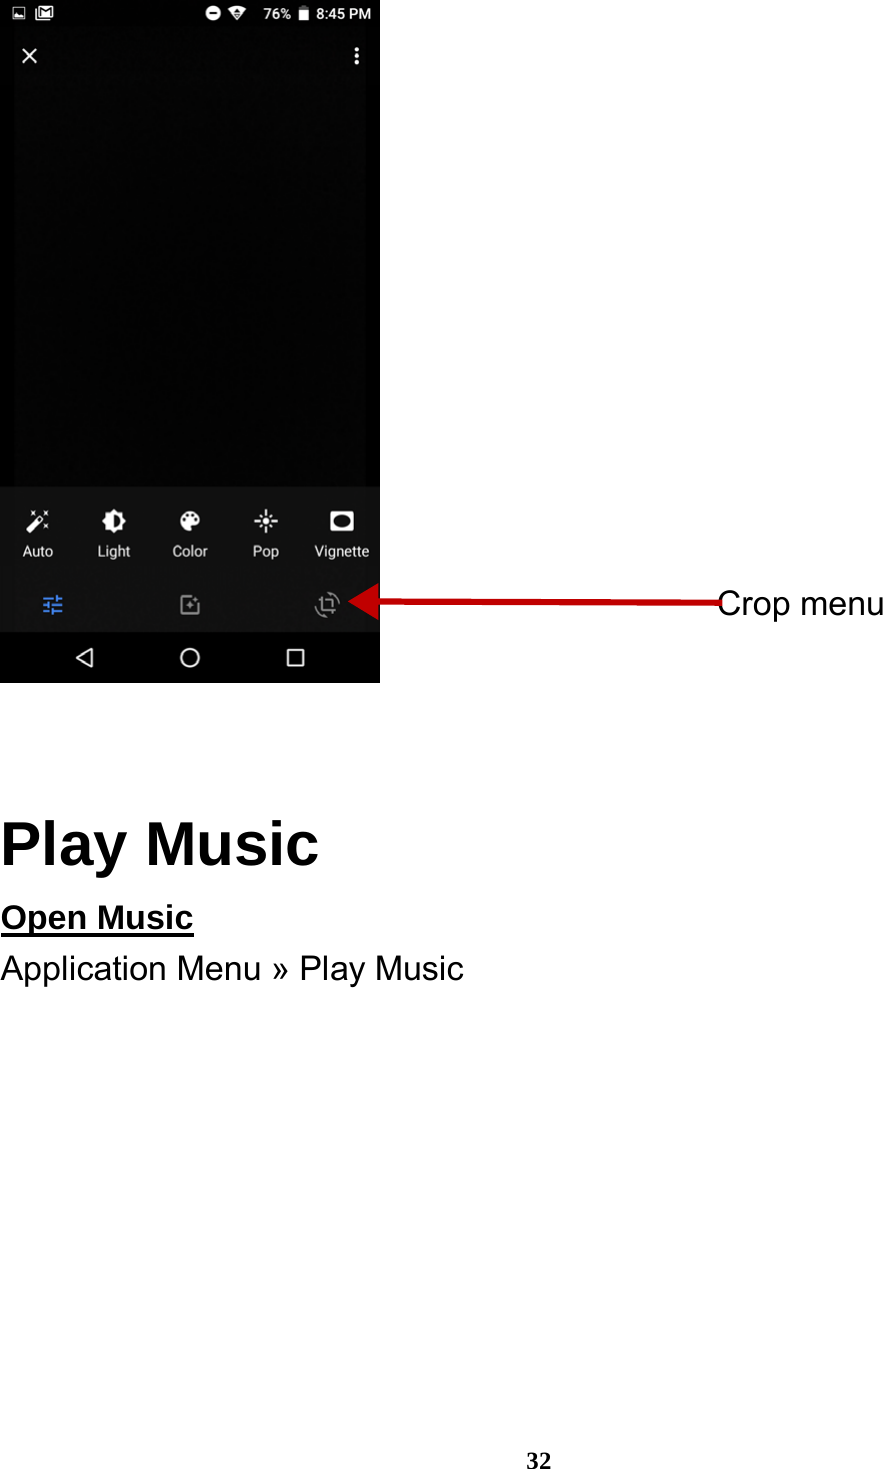  32   Play Music Open Music                                                         Application Menu » Play Music Crop menu 